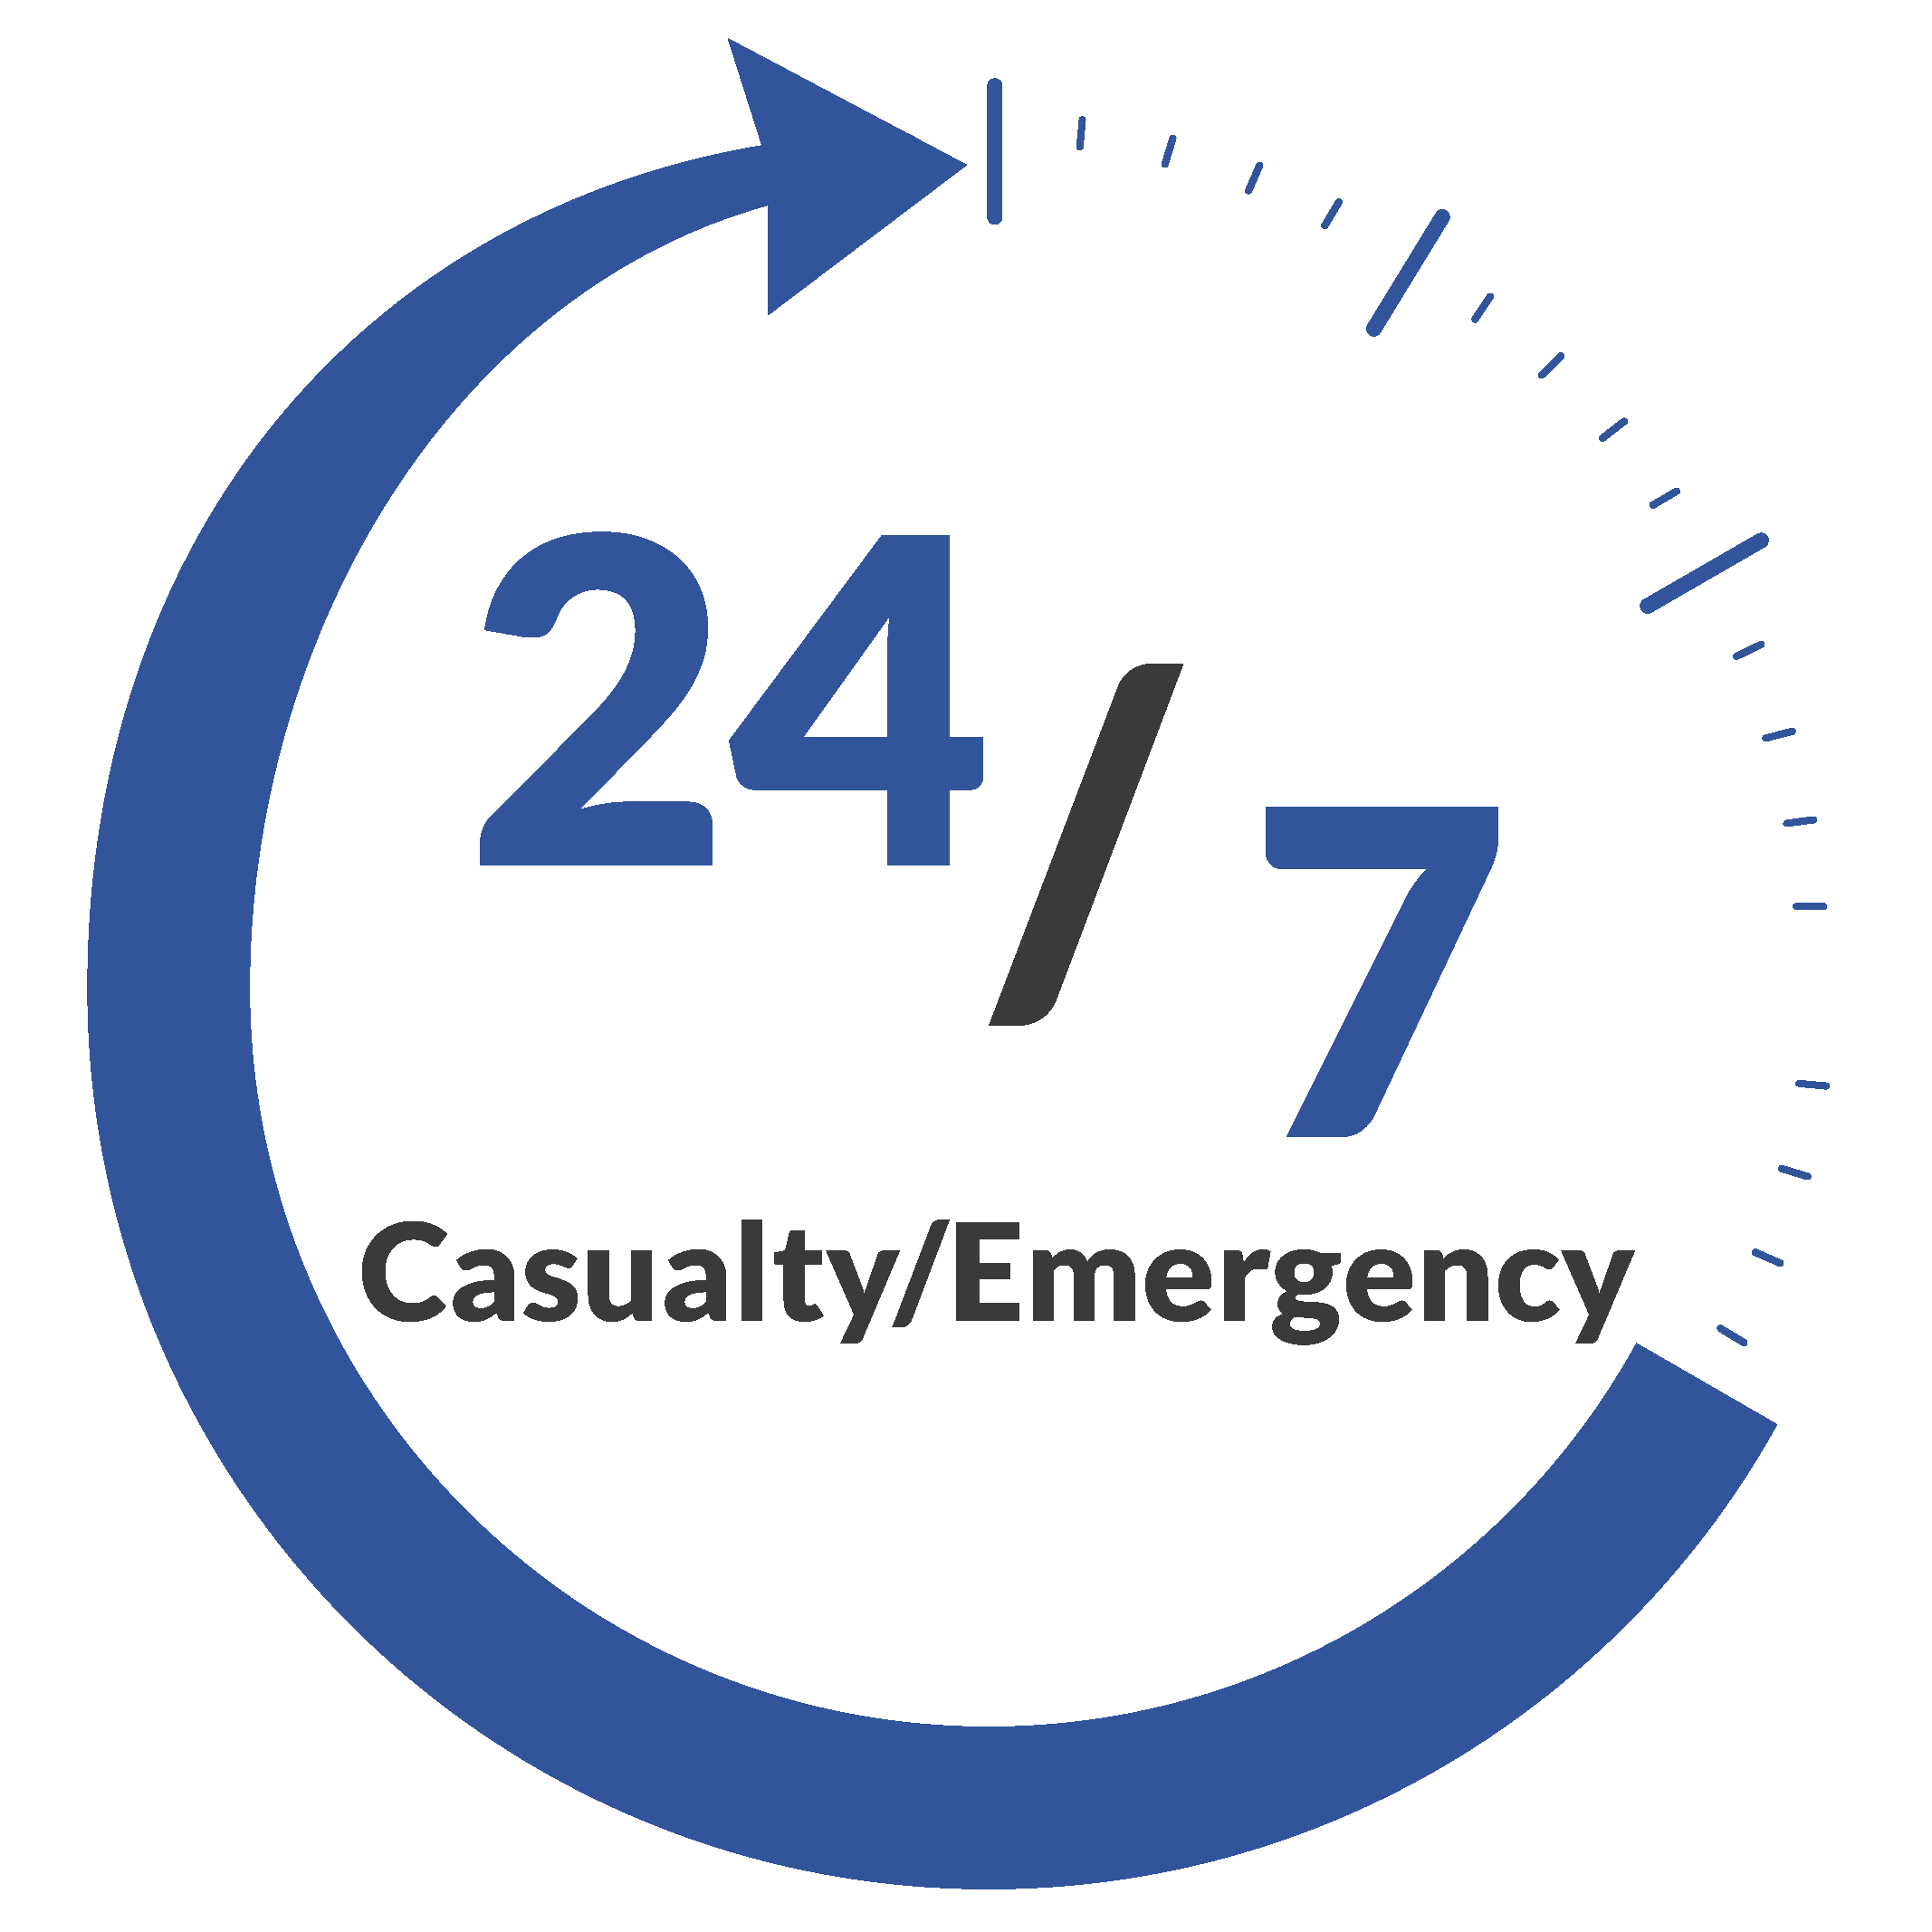 24x7 Casualty/Emergency